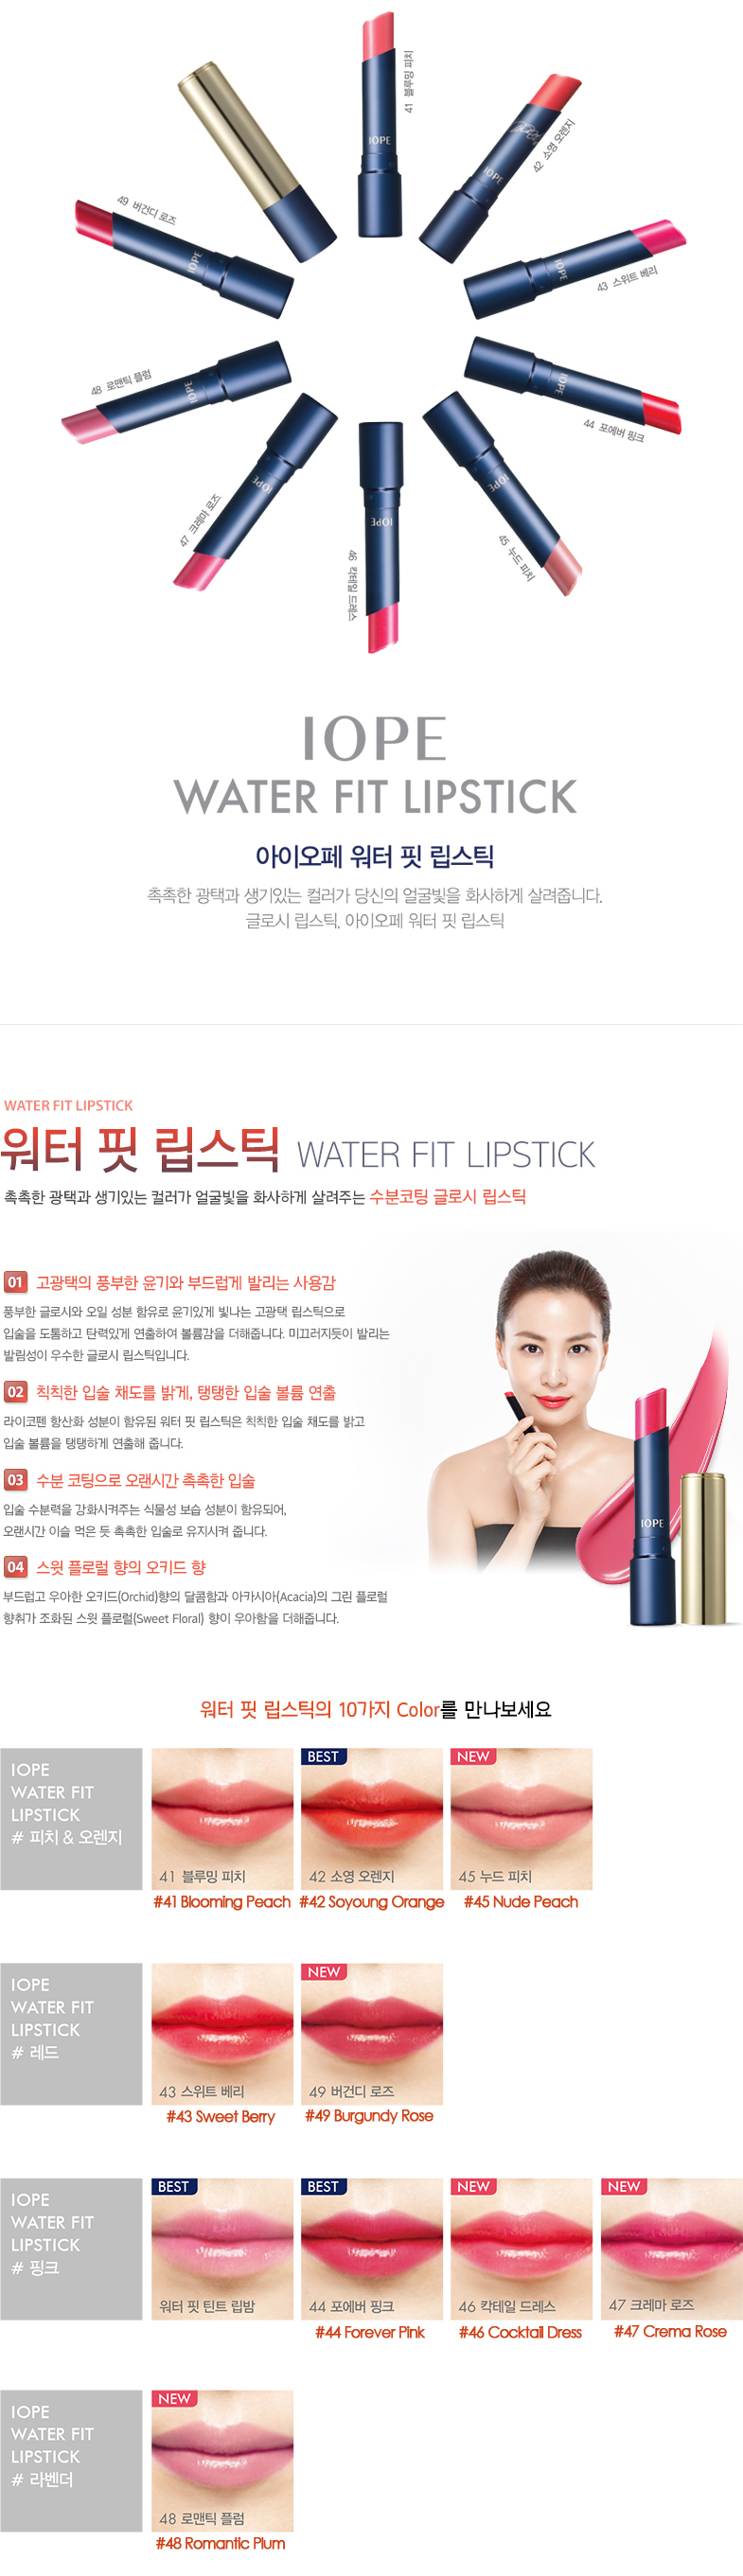 iope-water-fit-lipstick-3-2g-desc.jpg